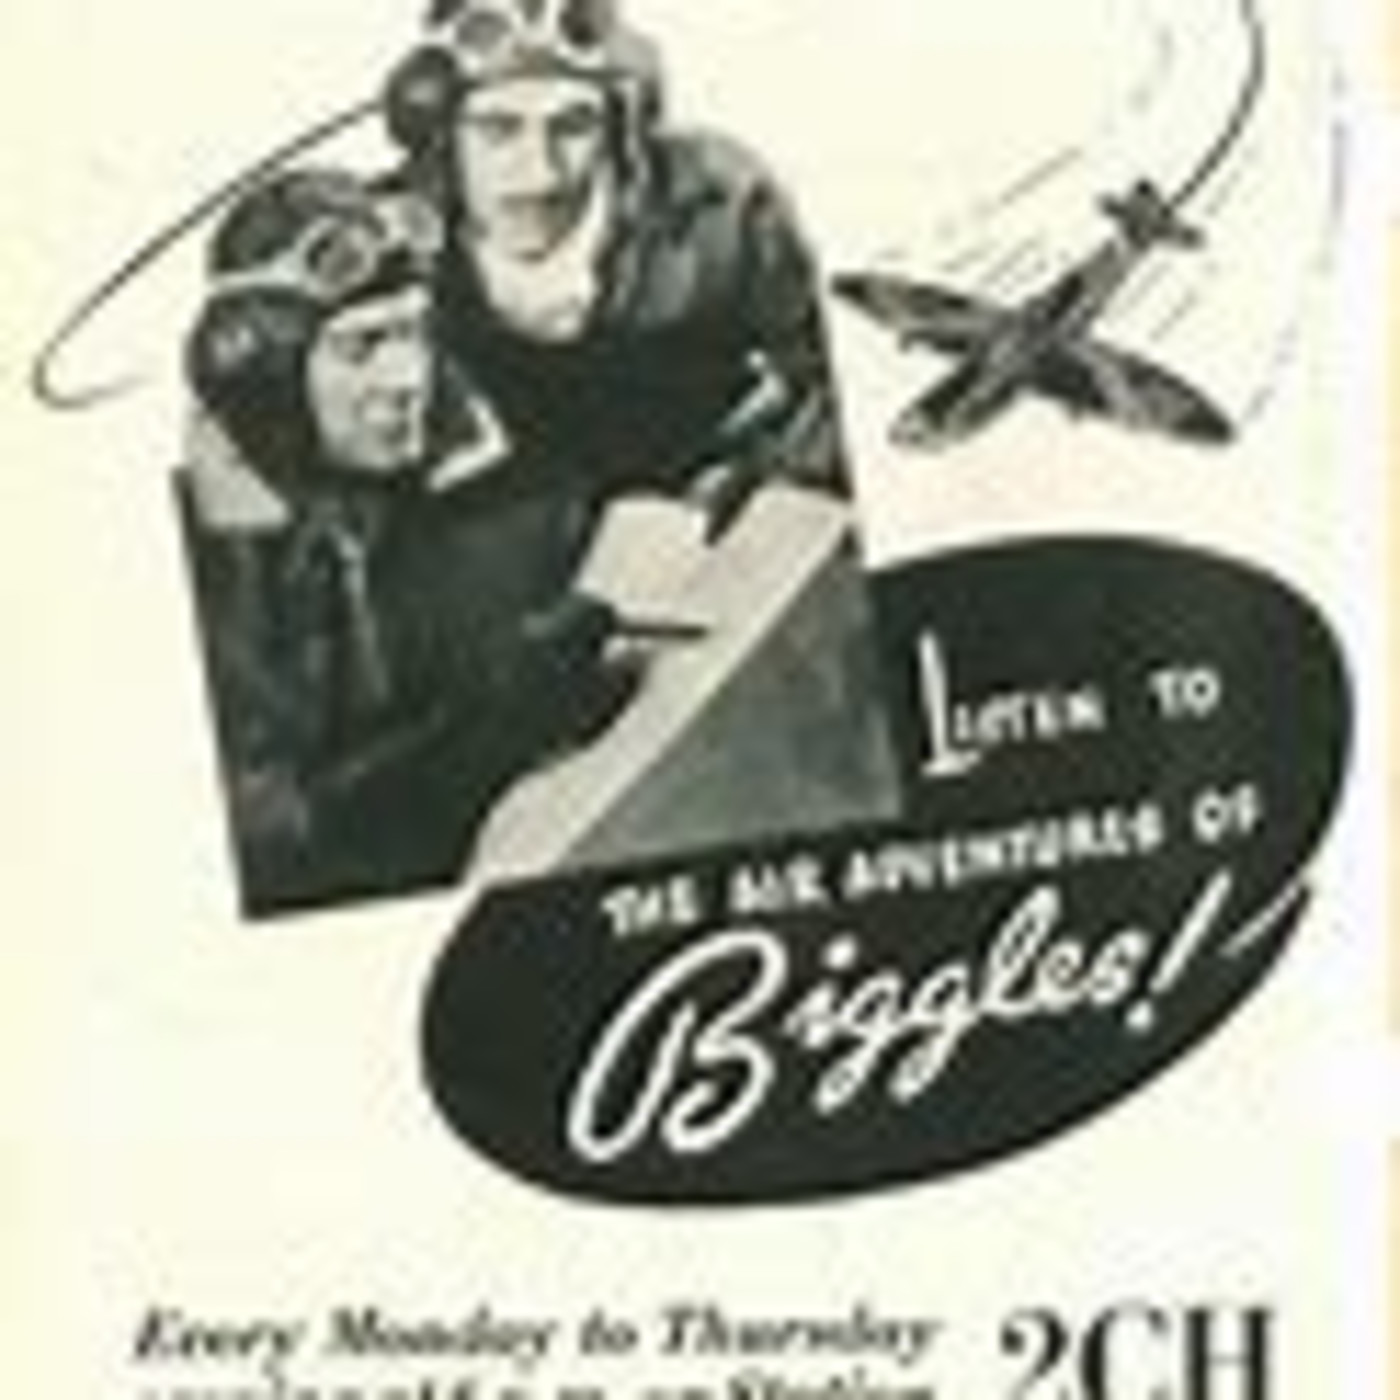 Air Adventures of Biggles xx-xx-xx International Brigade (33)